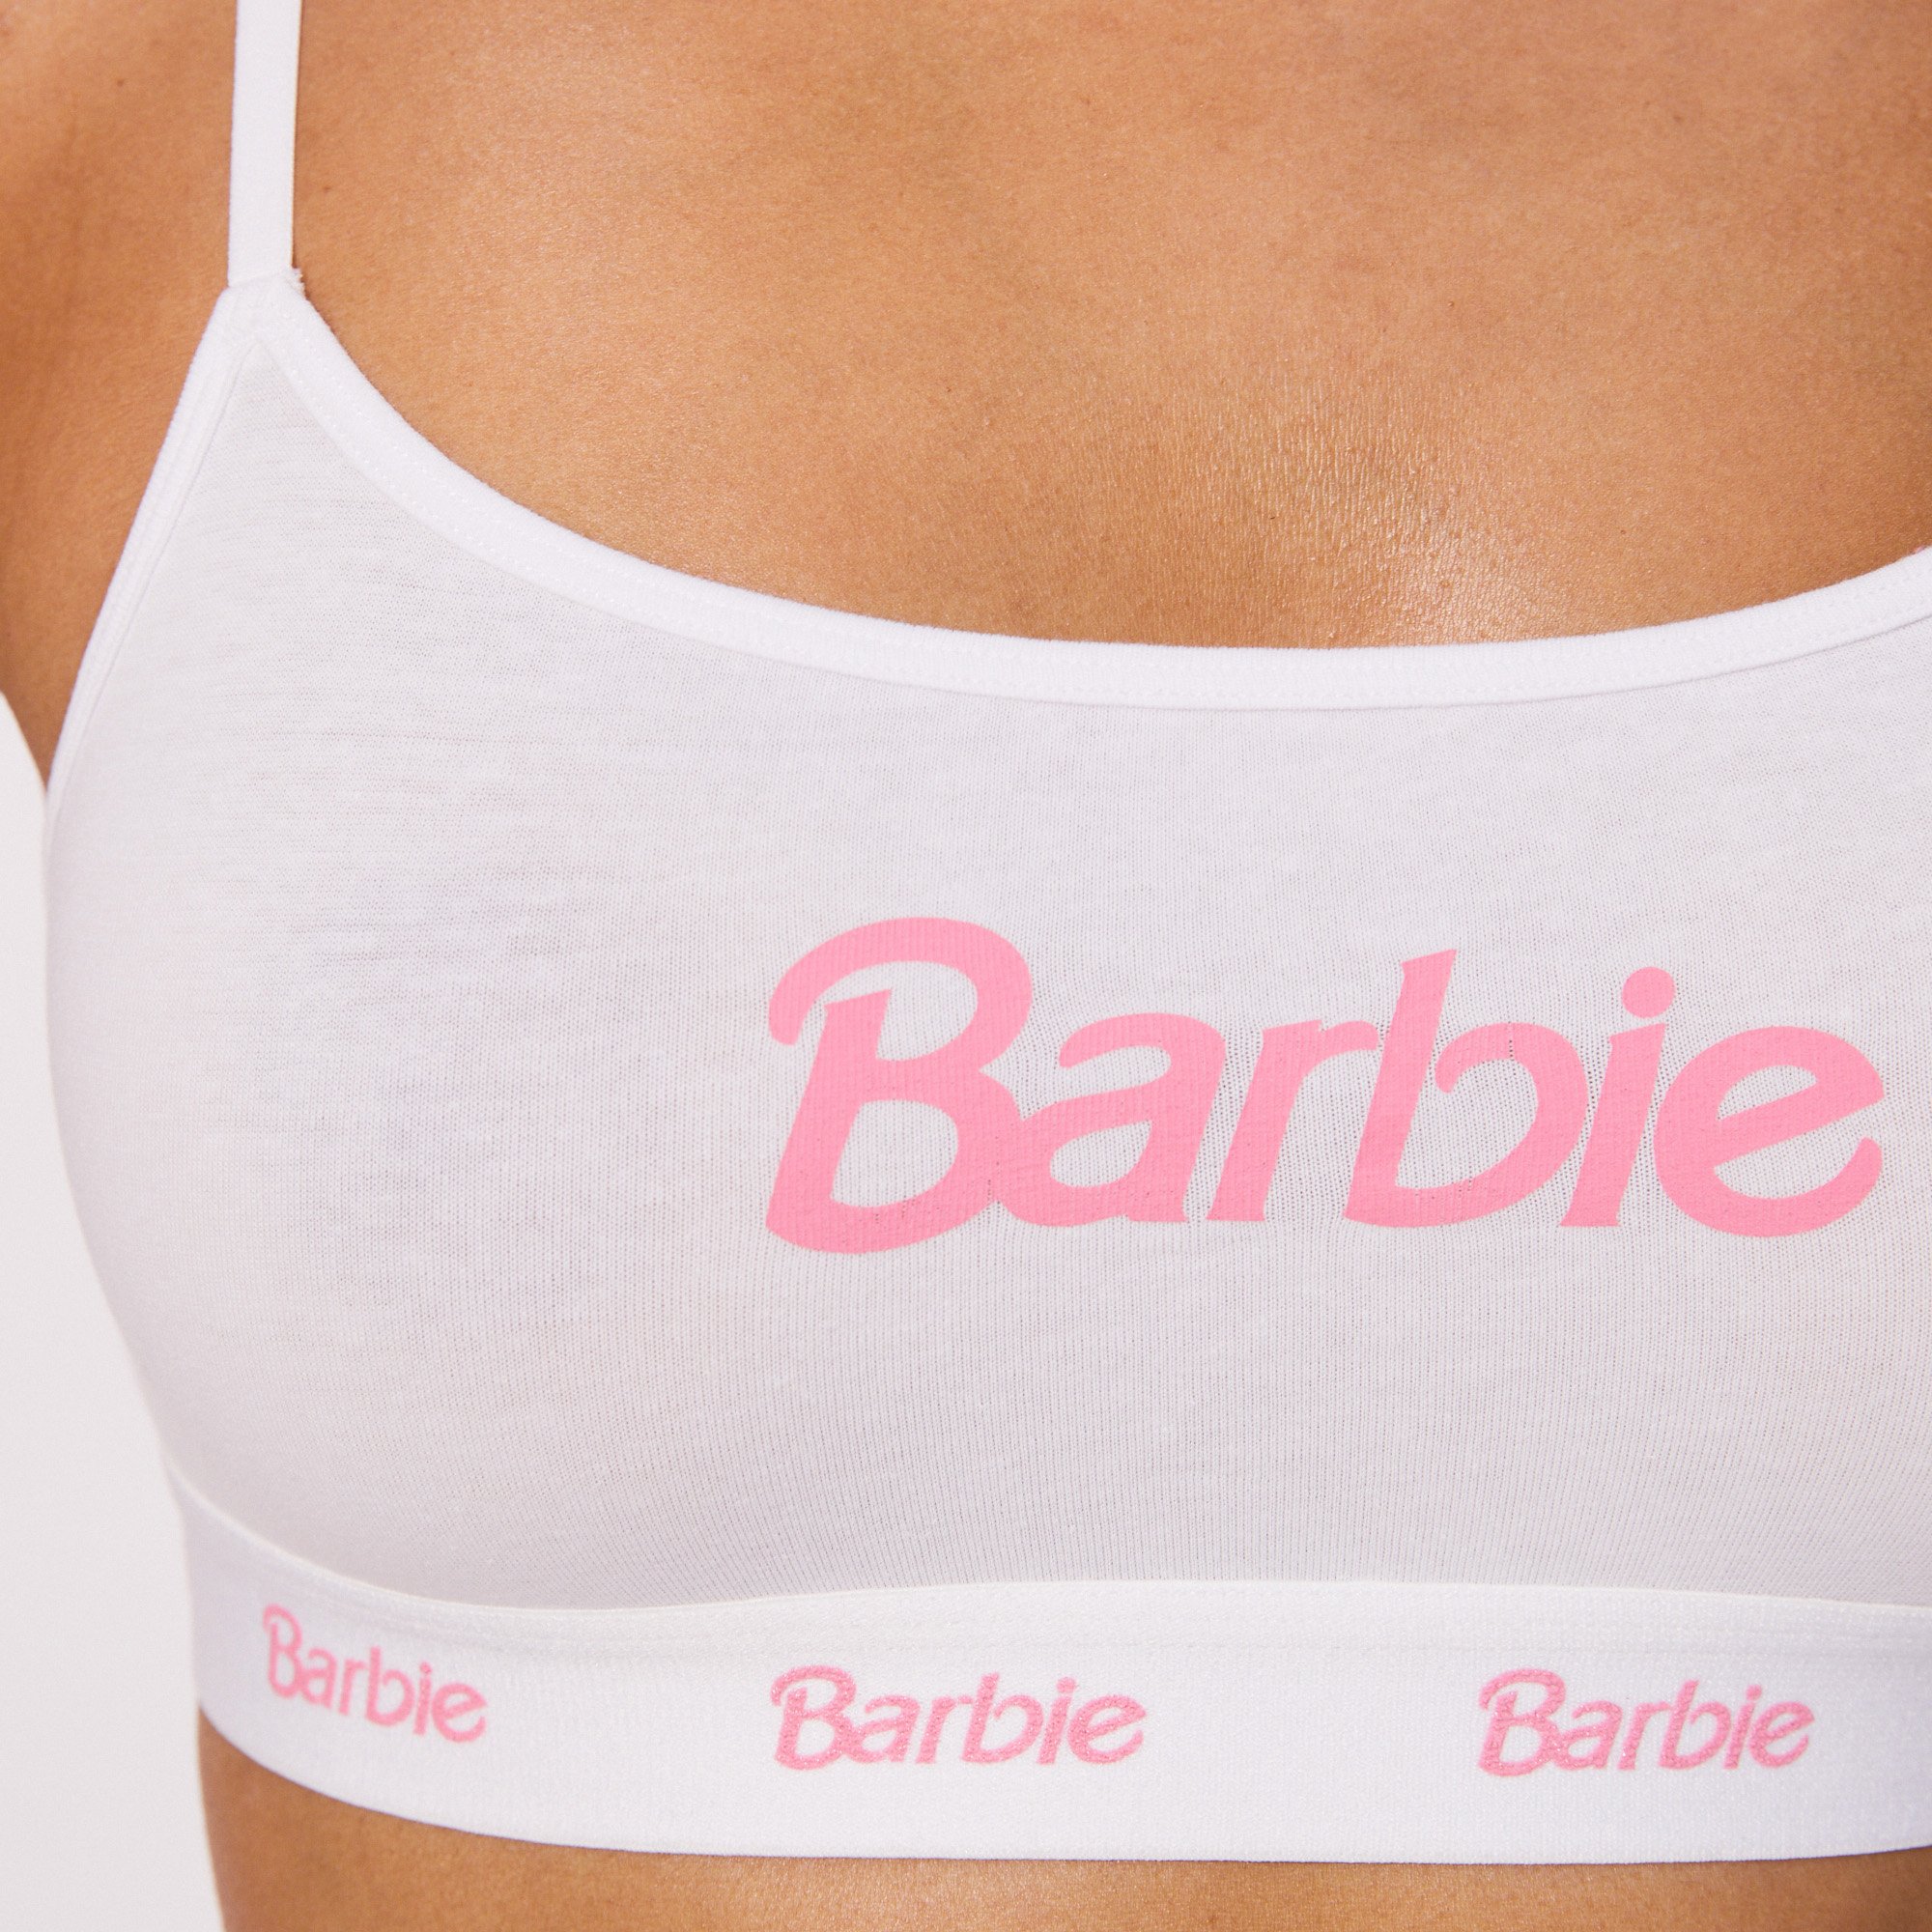 Barbie bra